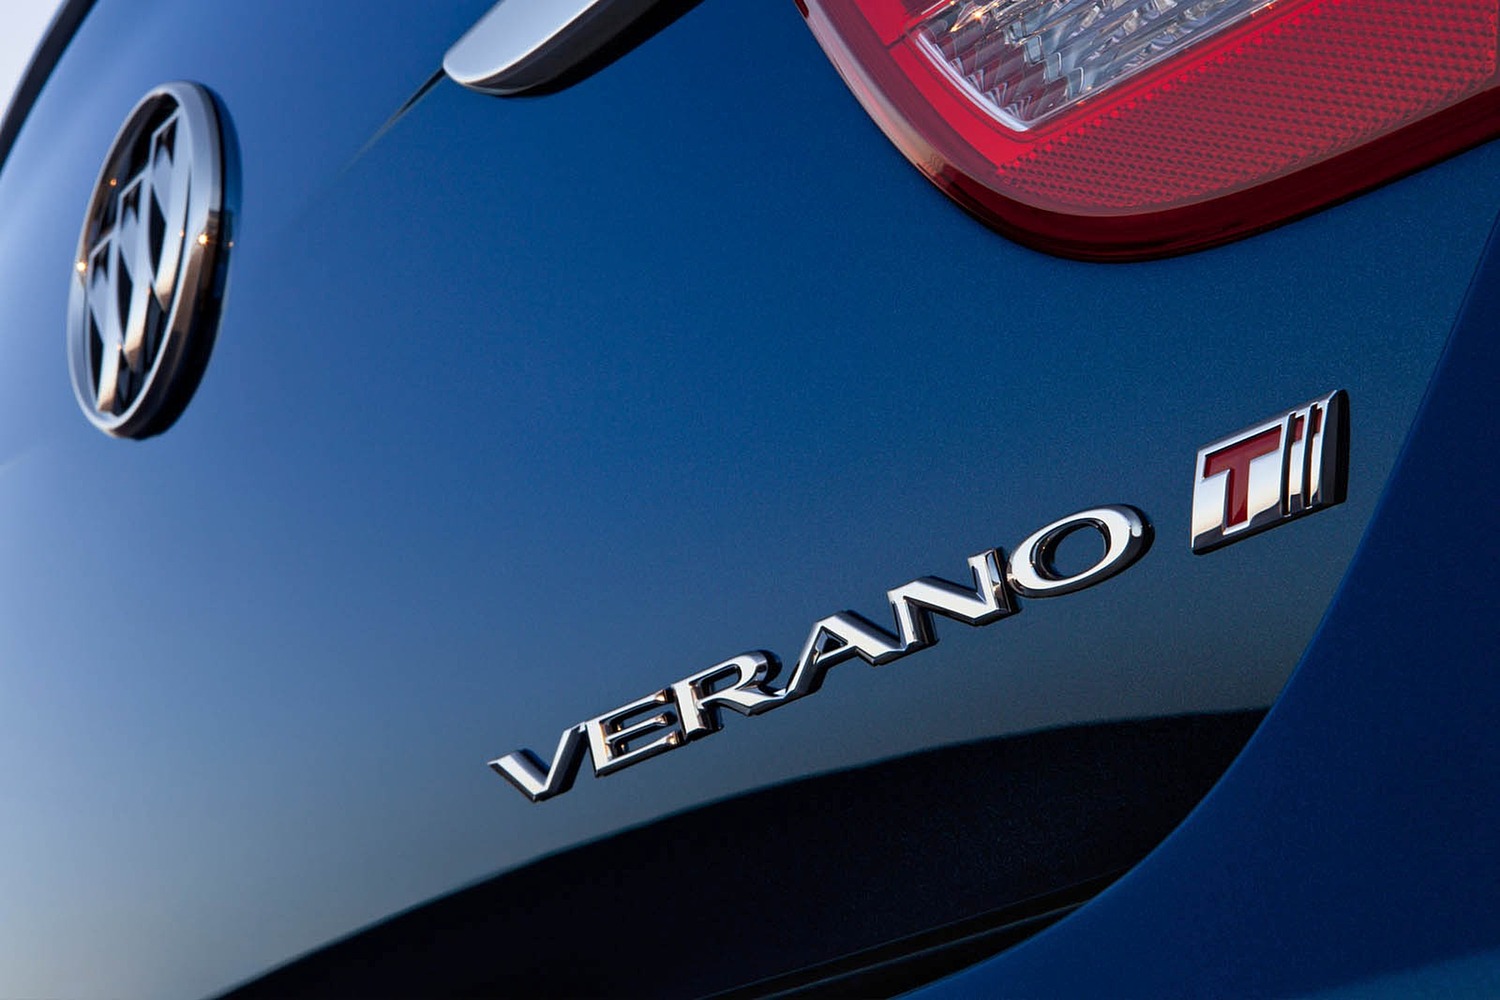 Buick Verano Premium Turbo Group Sedan Rear Badge (2015 model year shown)